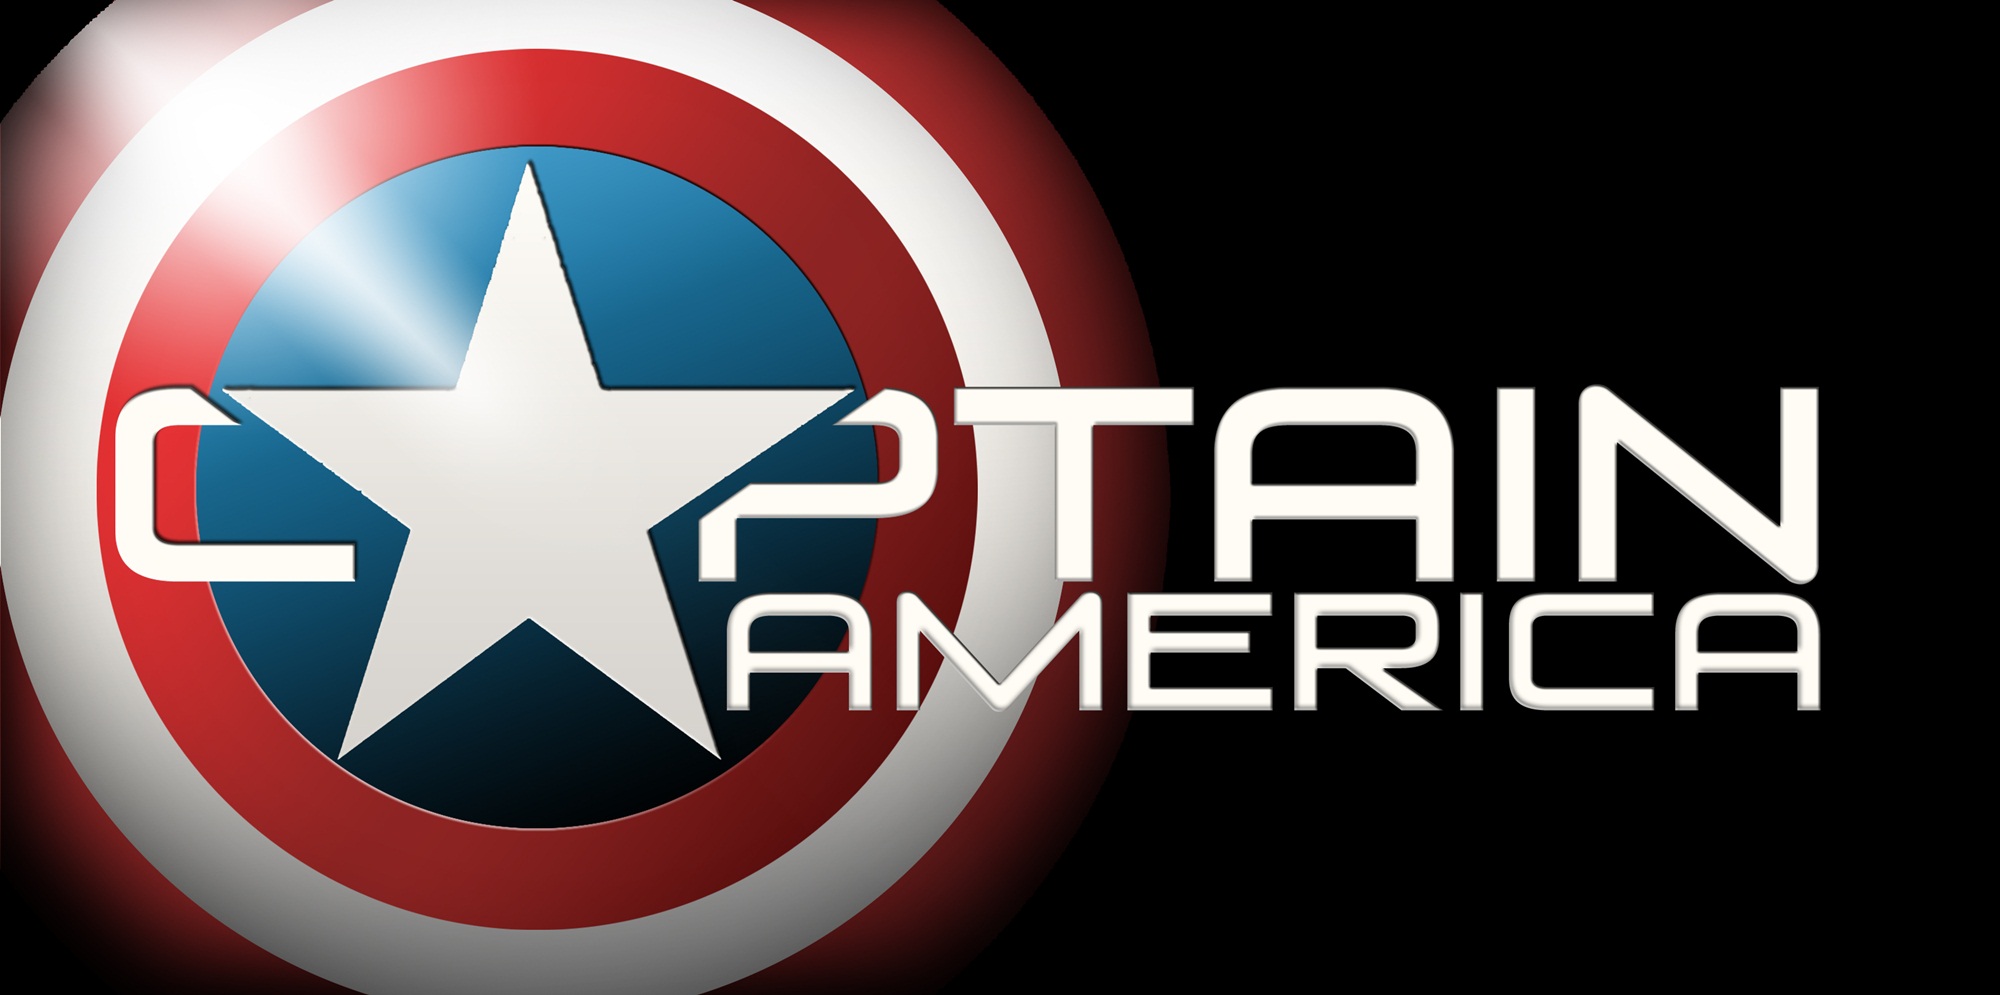 Cool Captain America Wallpapers - Top 27 Best Captain America Wallpapers [  HQ ]